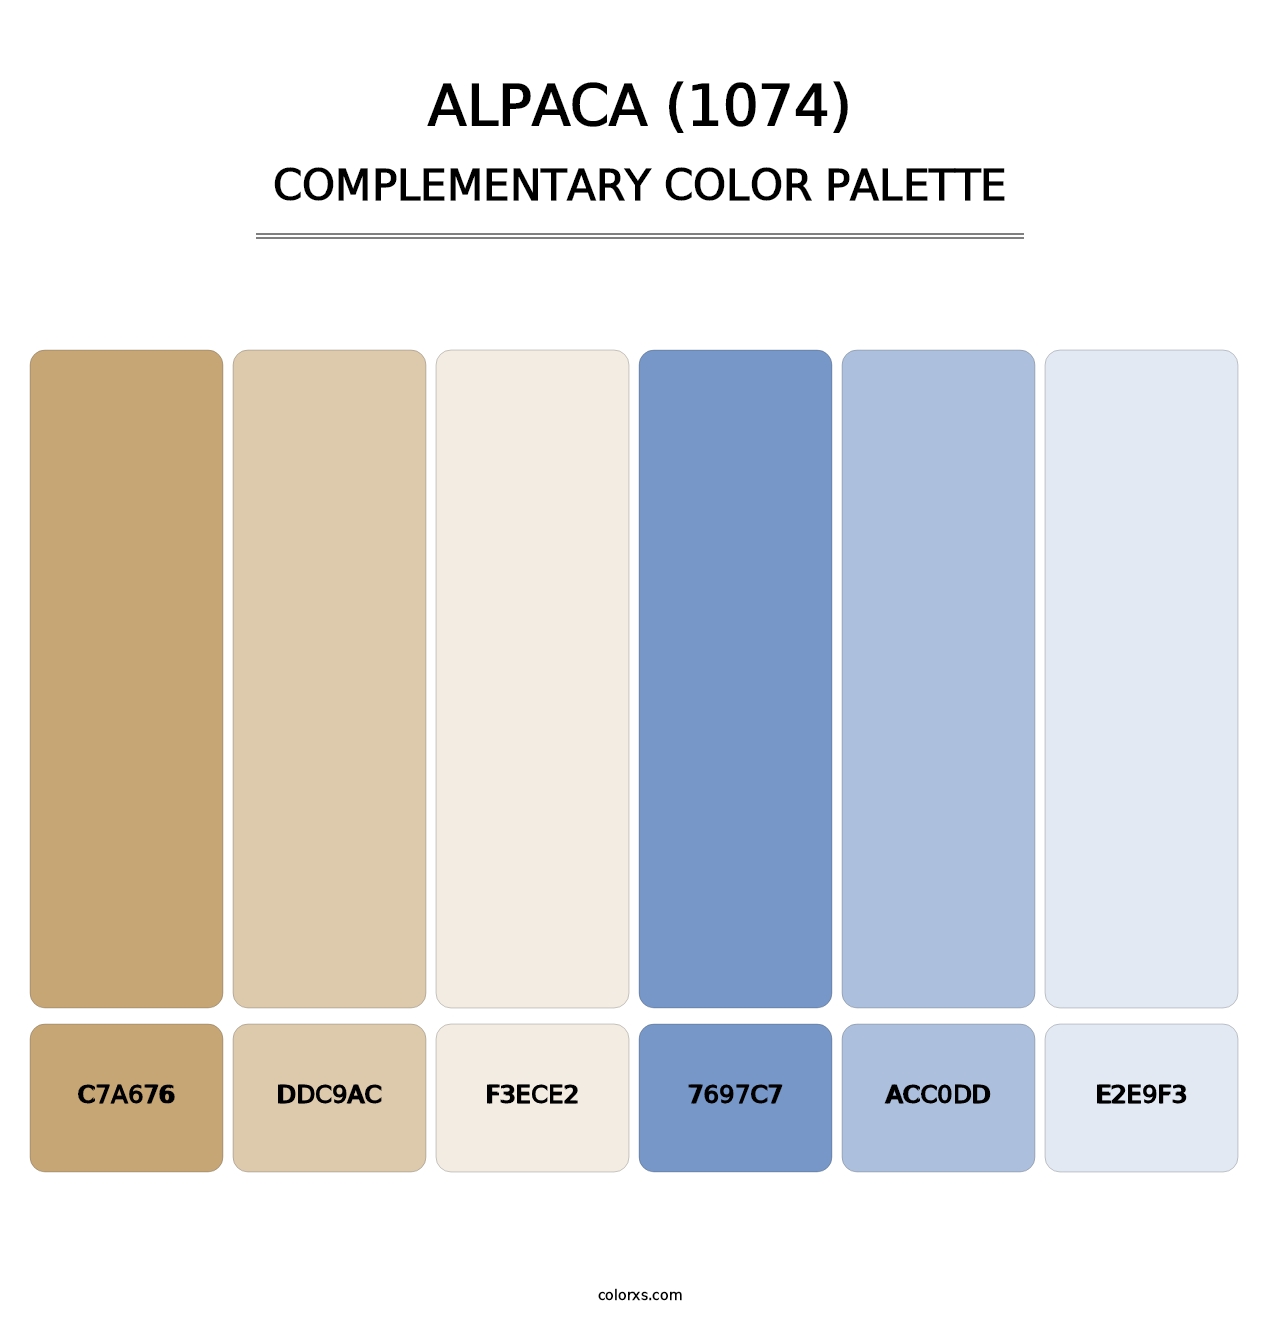 Alpaca (1074) - Complementary Color Palette